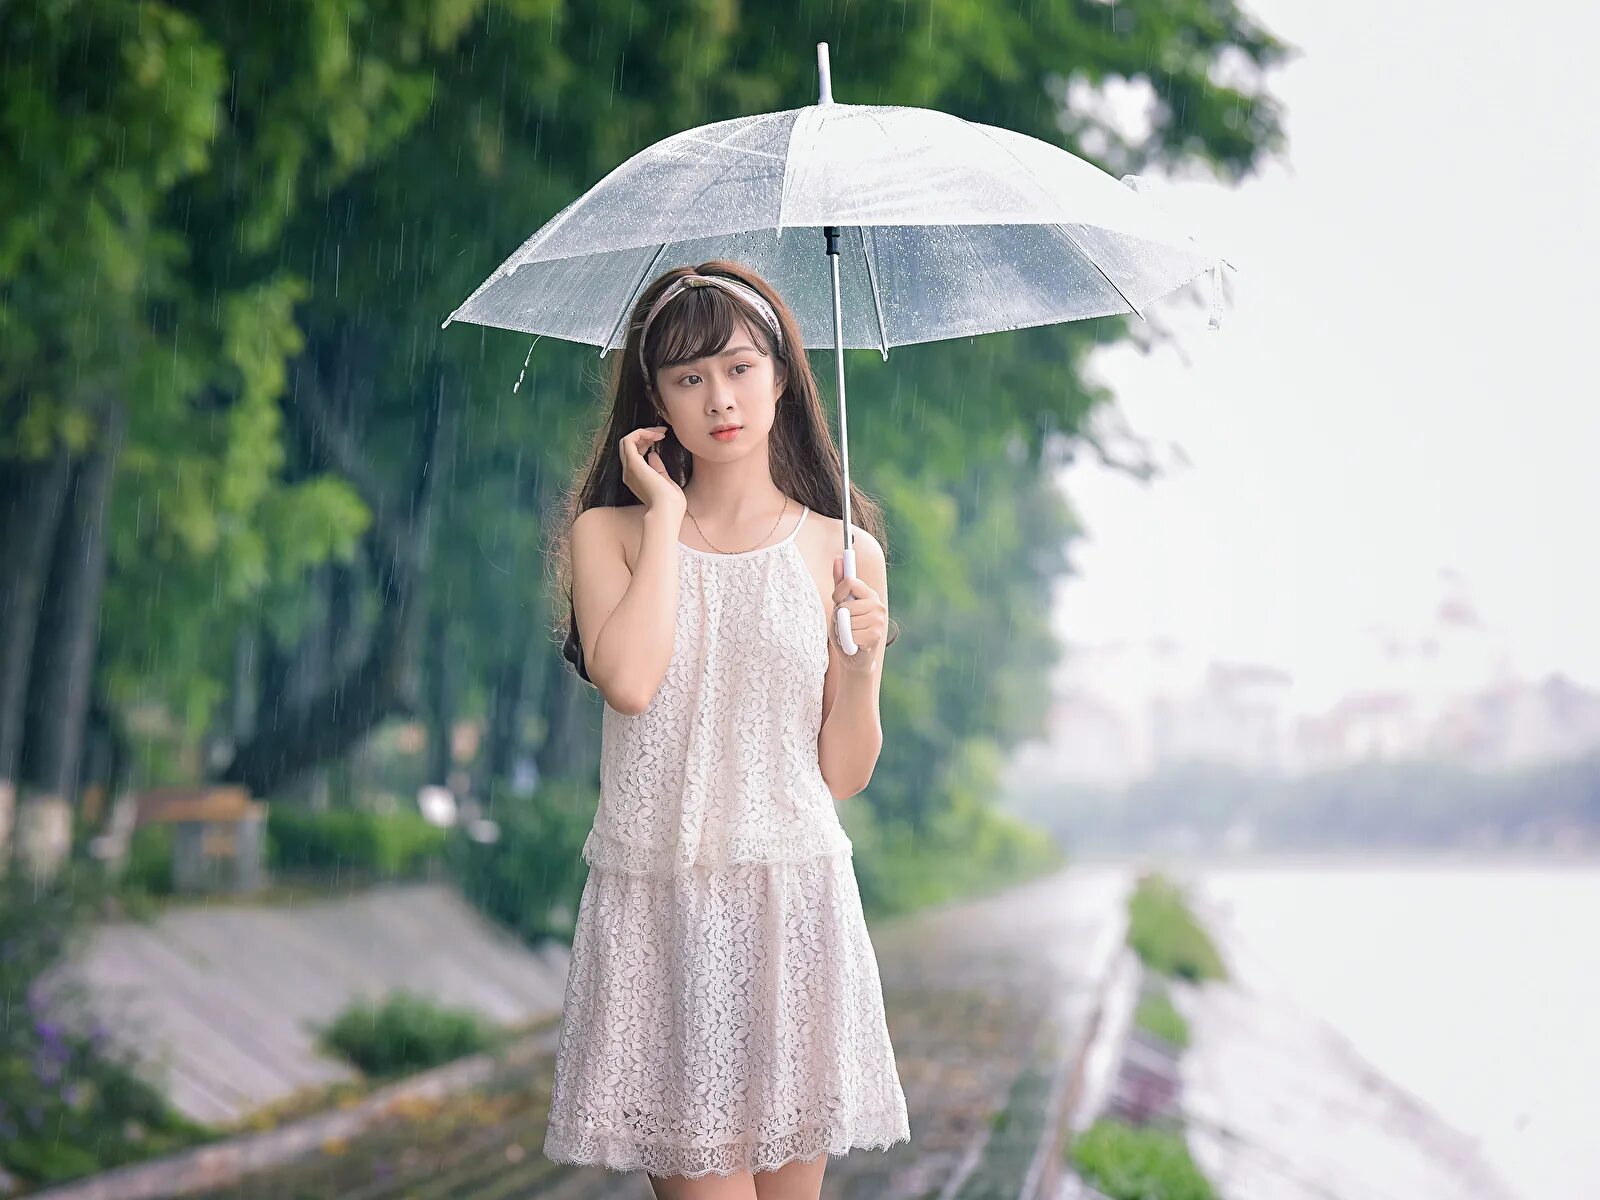 Umbrella dress. Девушка с зонтом. Девушка под зонтом. Девочка с зонтиком. Модель с зонтиком.